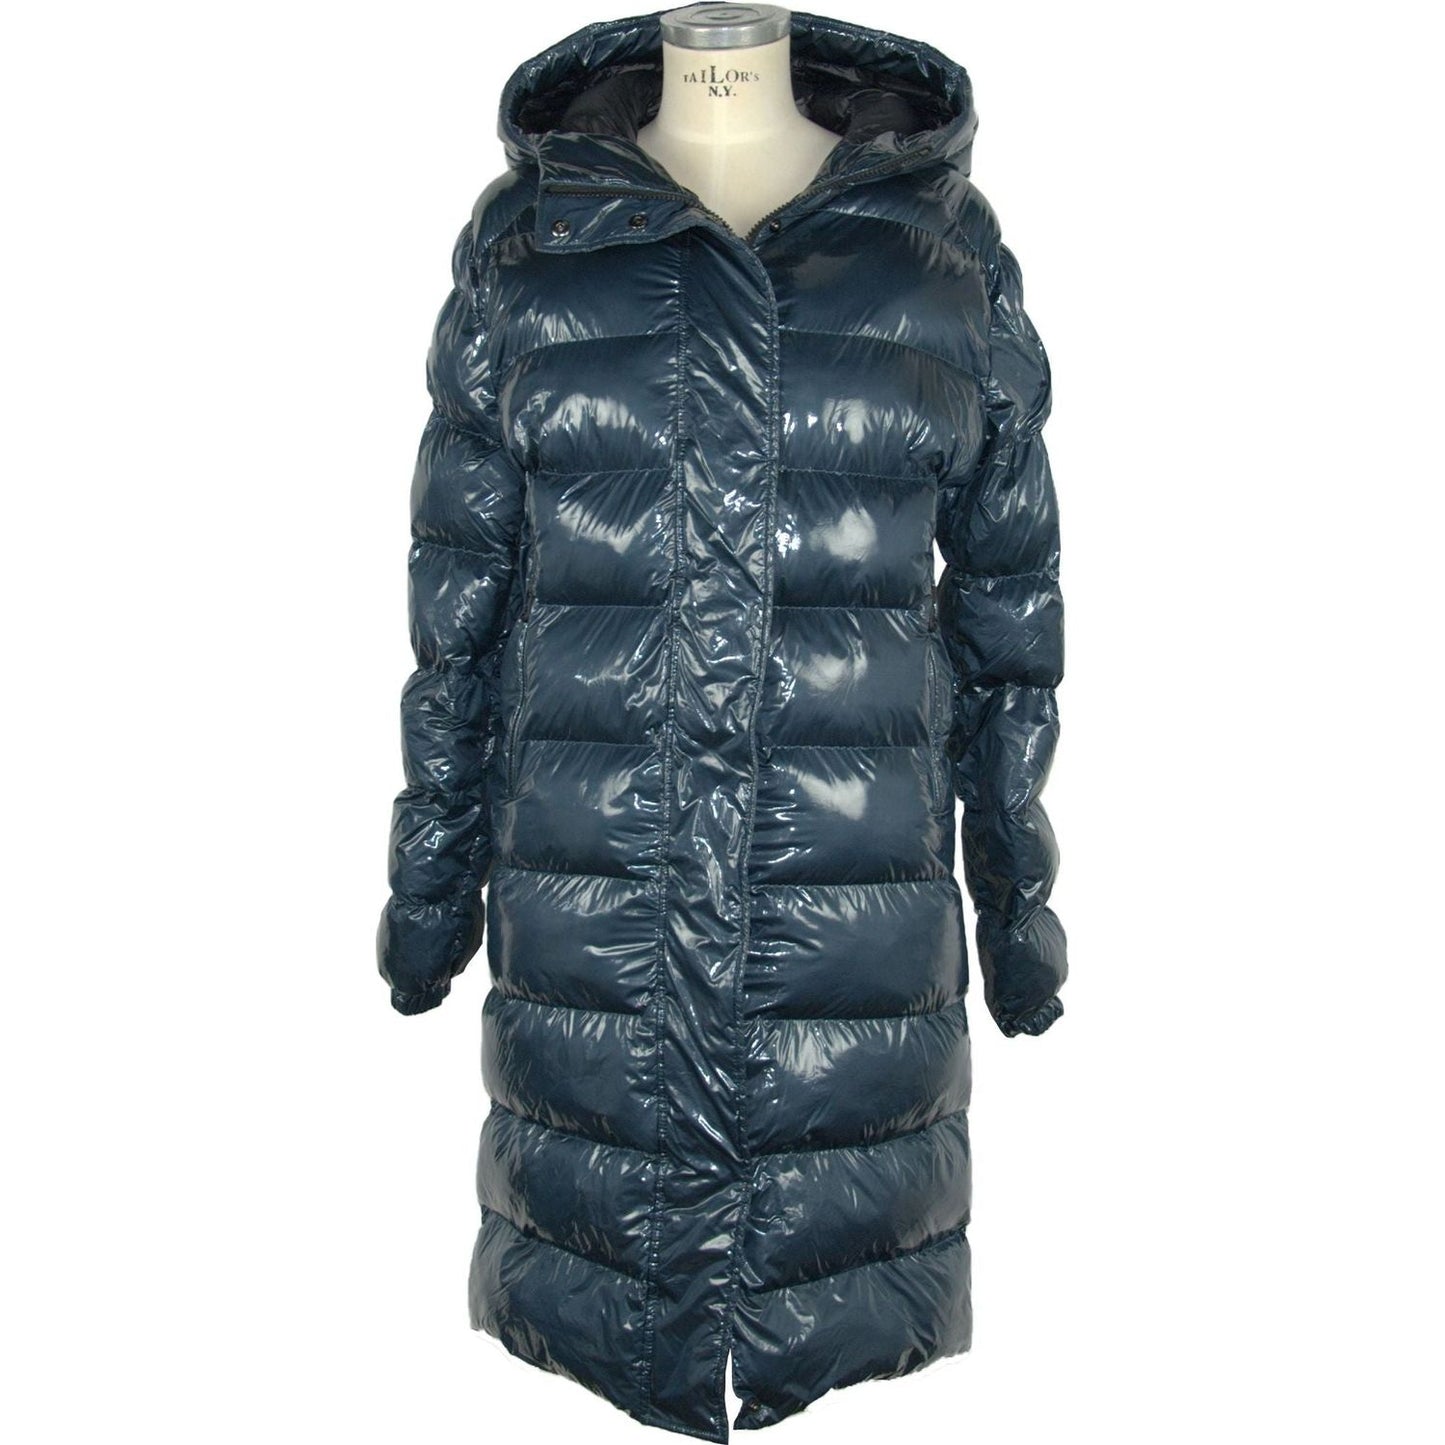 Refrigiwear Elegant Long Down Jacket for Stylish Warmth blue-polyamide-jackets-coat-3 WOMAN COATS & JACKETS stock_product_image_863_1162662017-501e0a17-63d.jpg